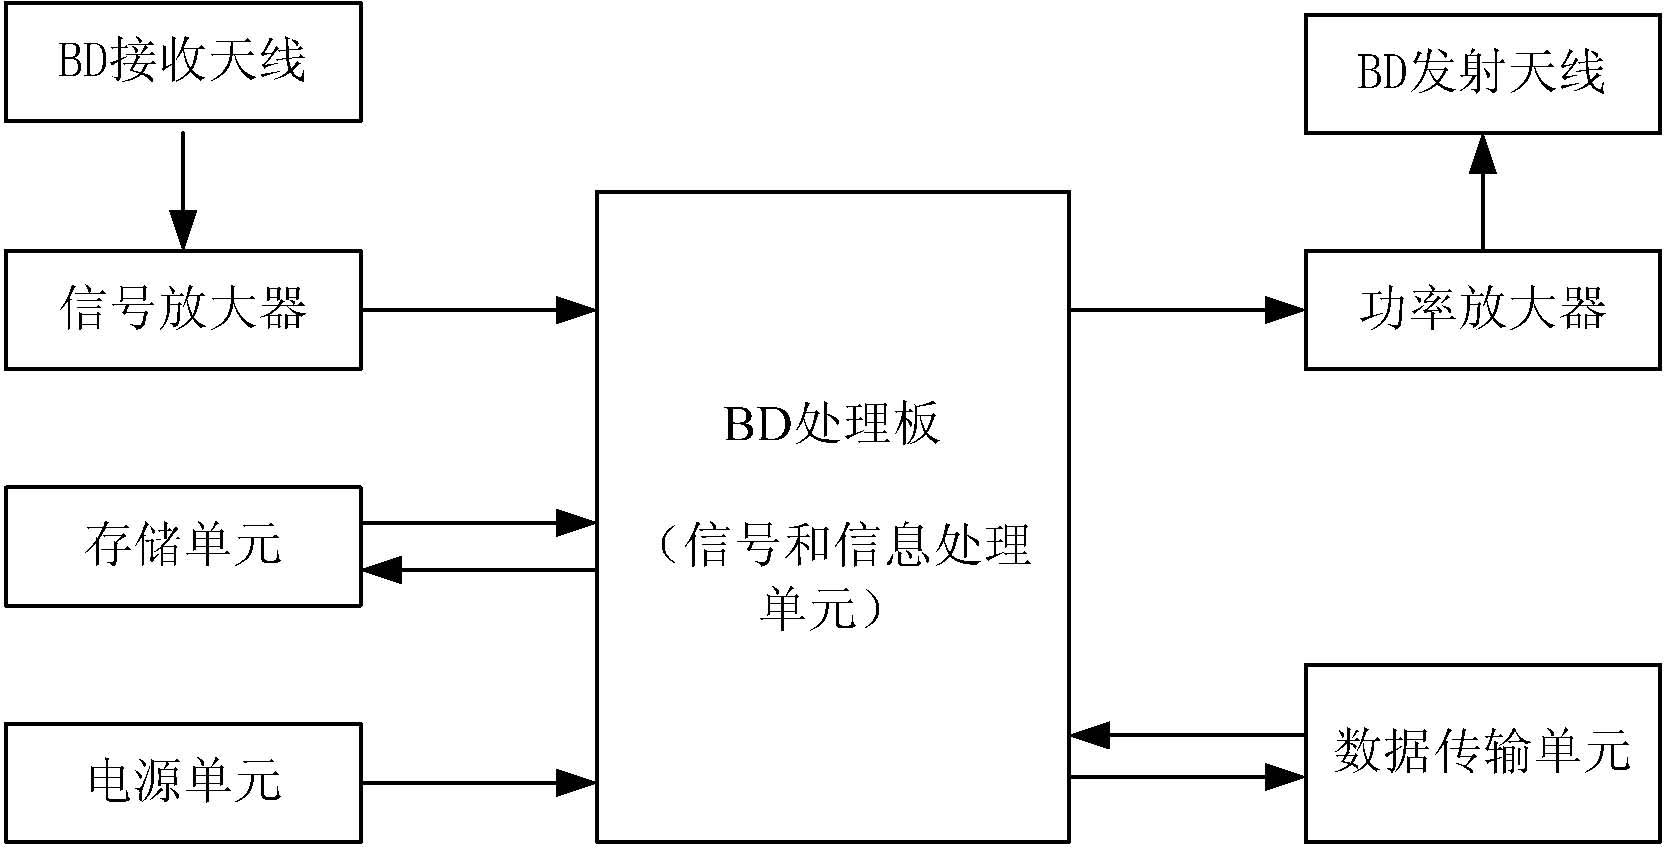 Field mobile positioning device based on backward diode (BD) communication